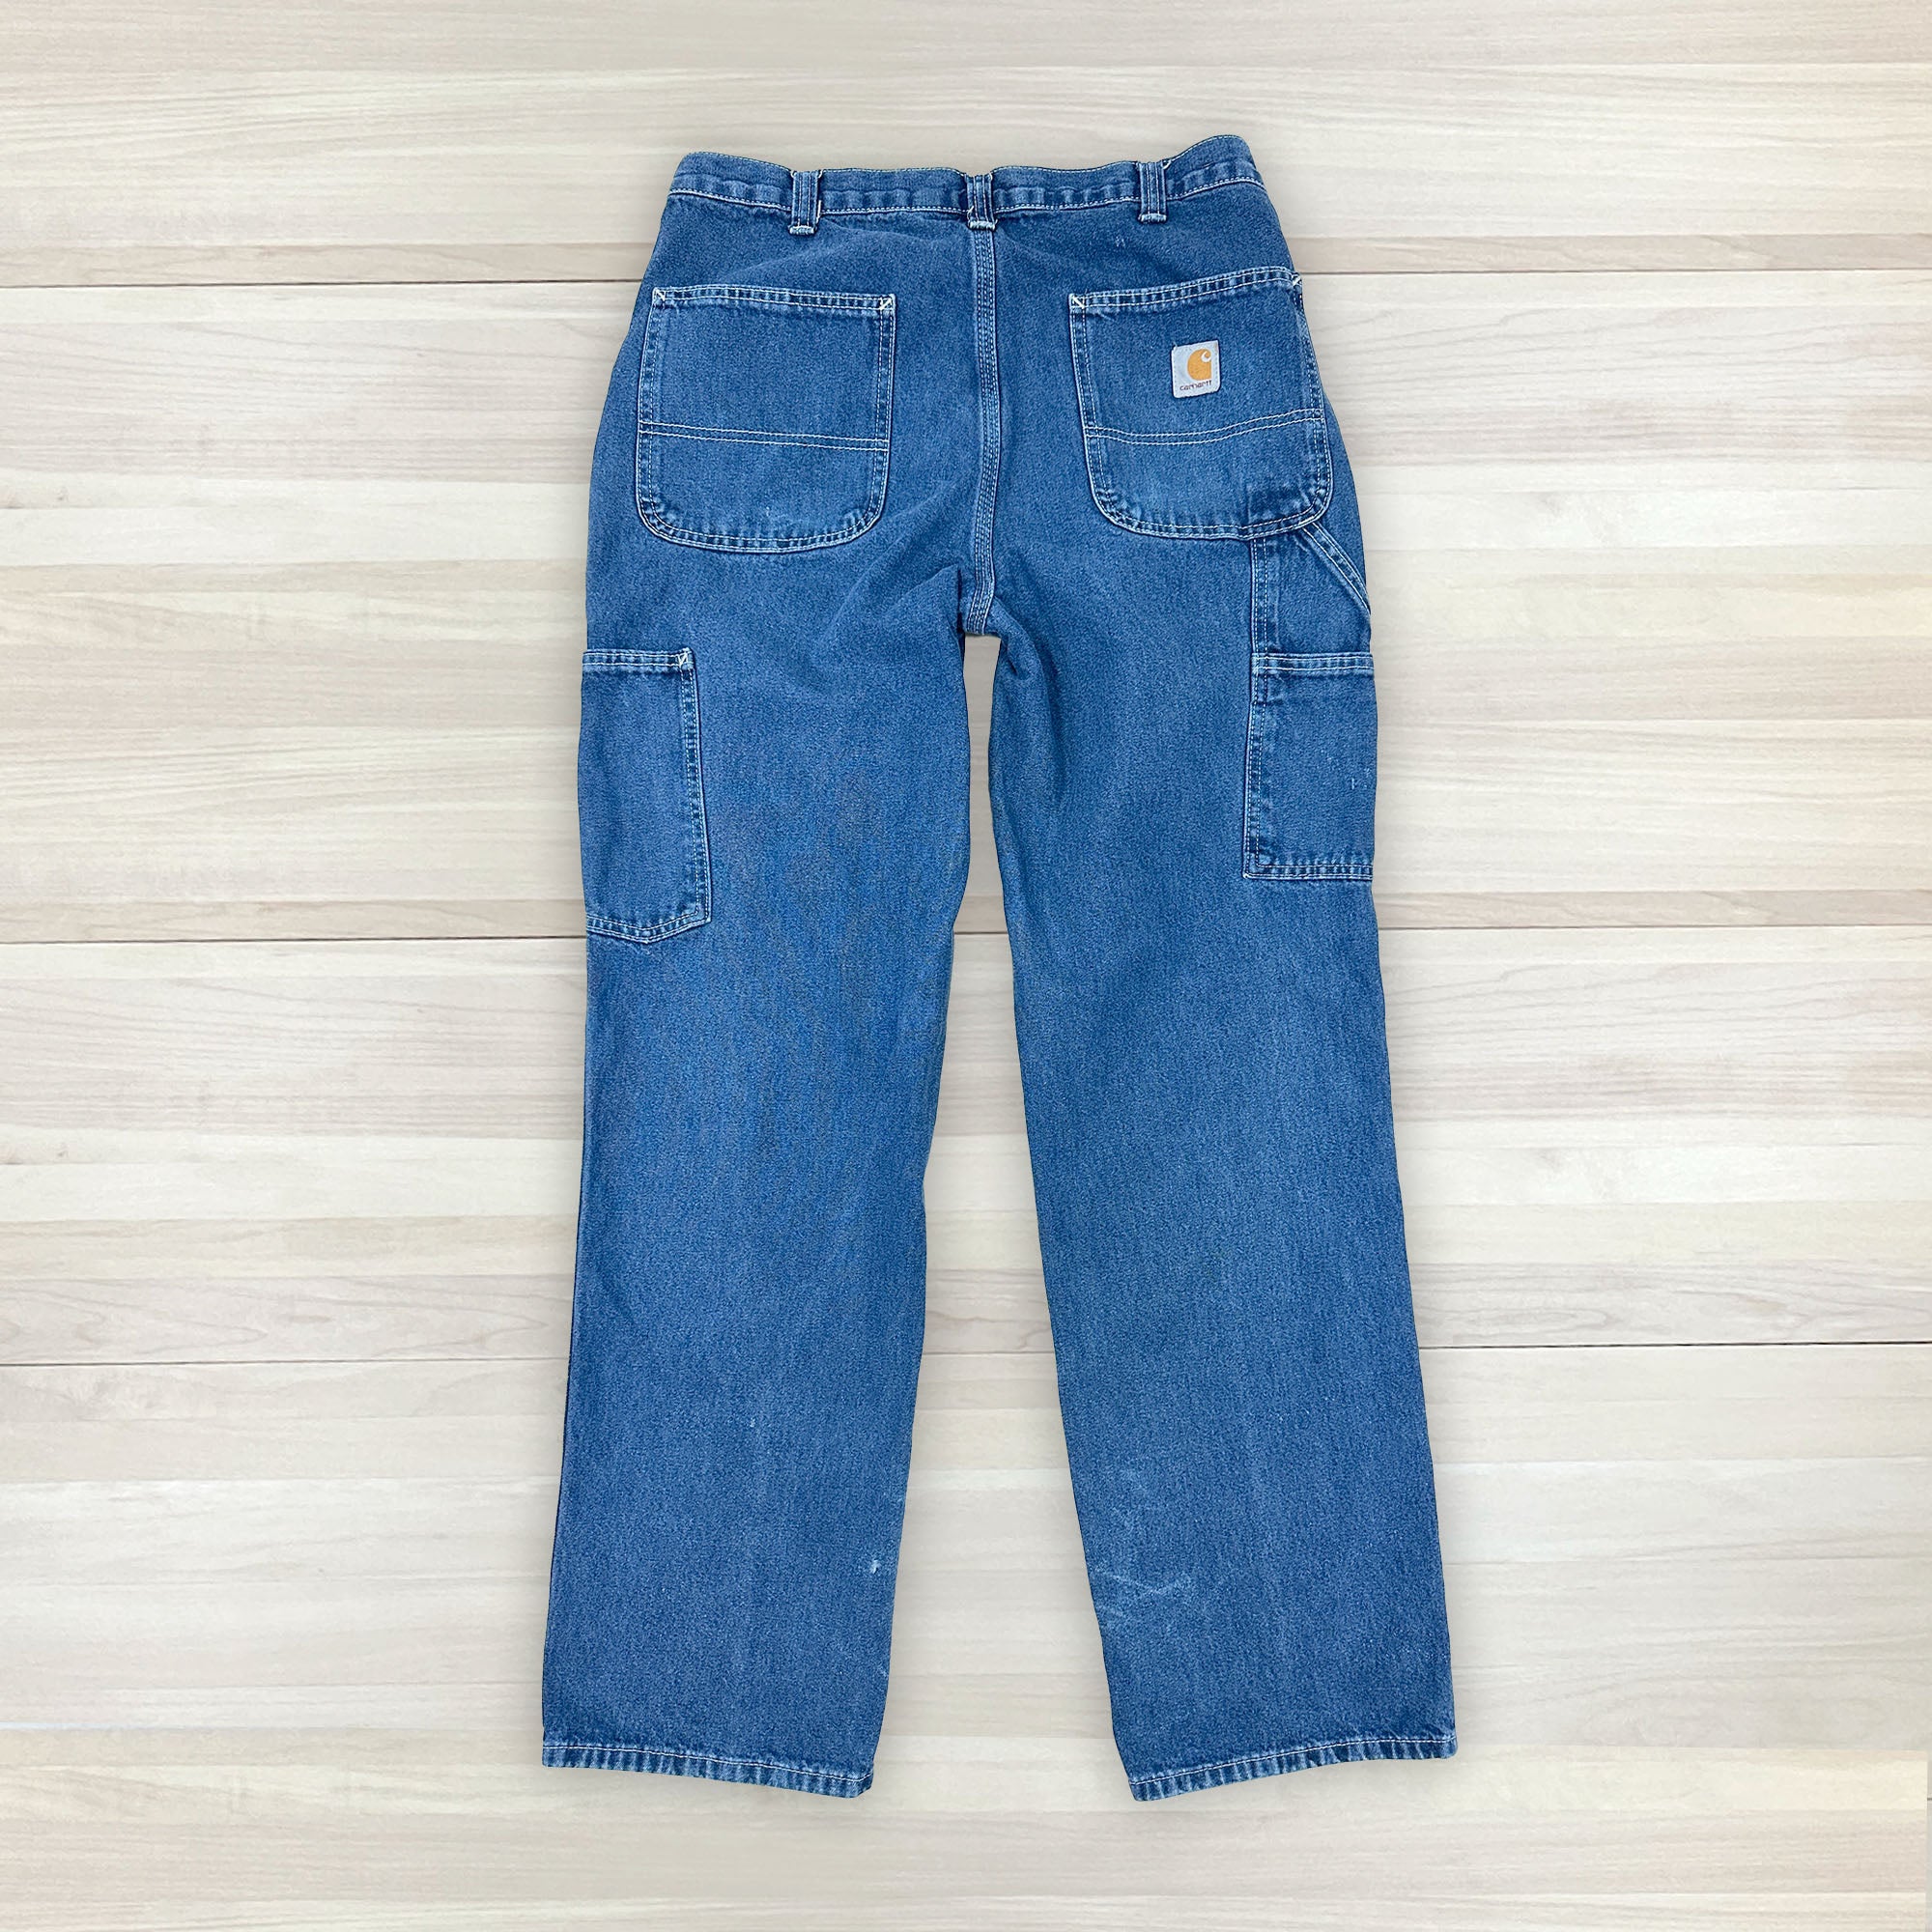 Men's Carhartt Dungaree Fit Carpenter Work Jeans - 32x32 - 0